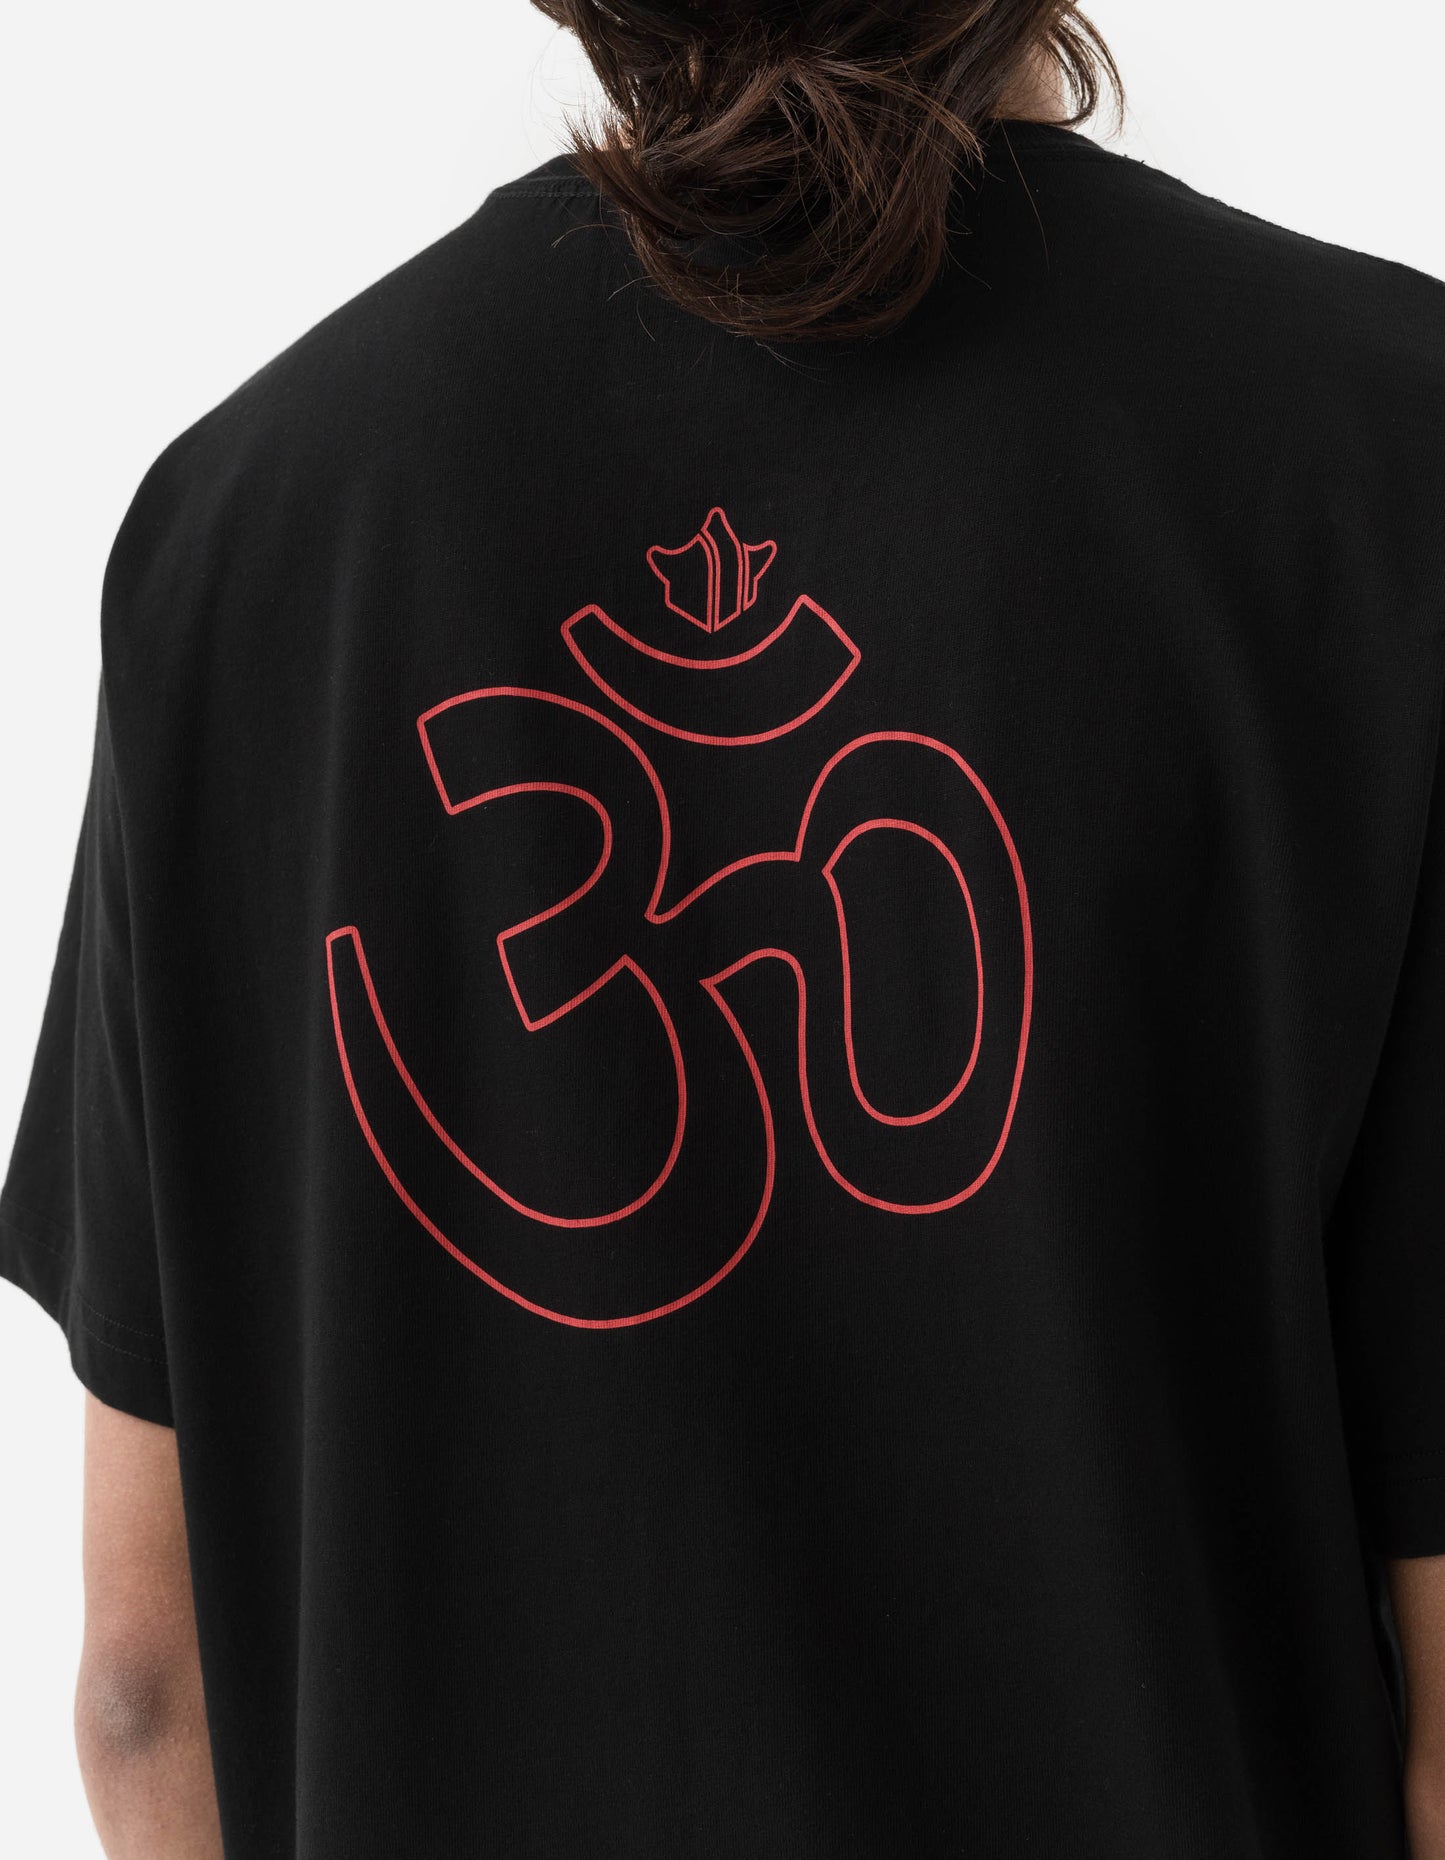 1306 30th Anniversary Aum T-Shirt Black